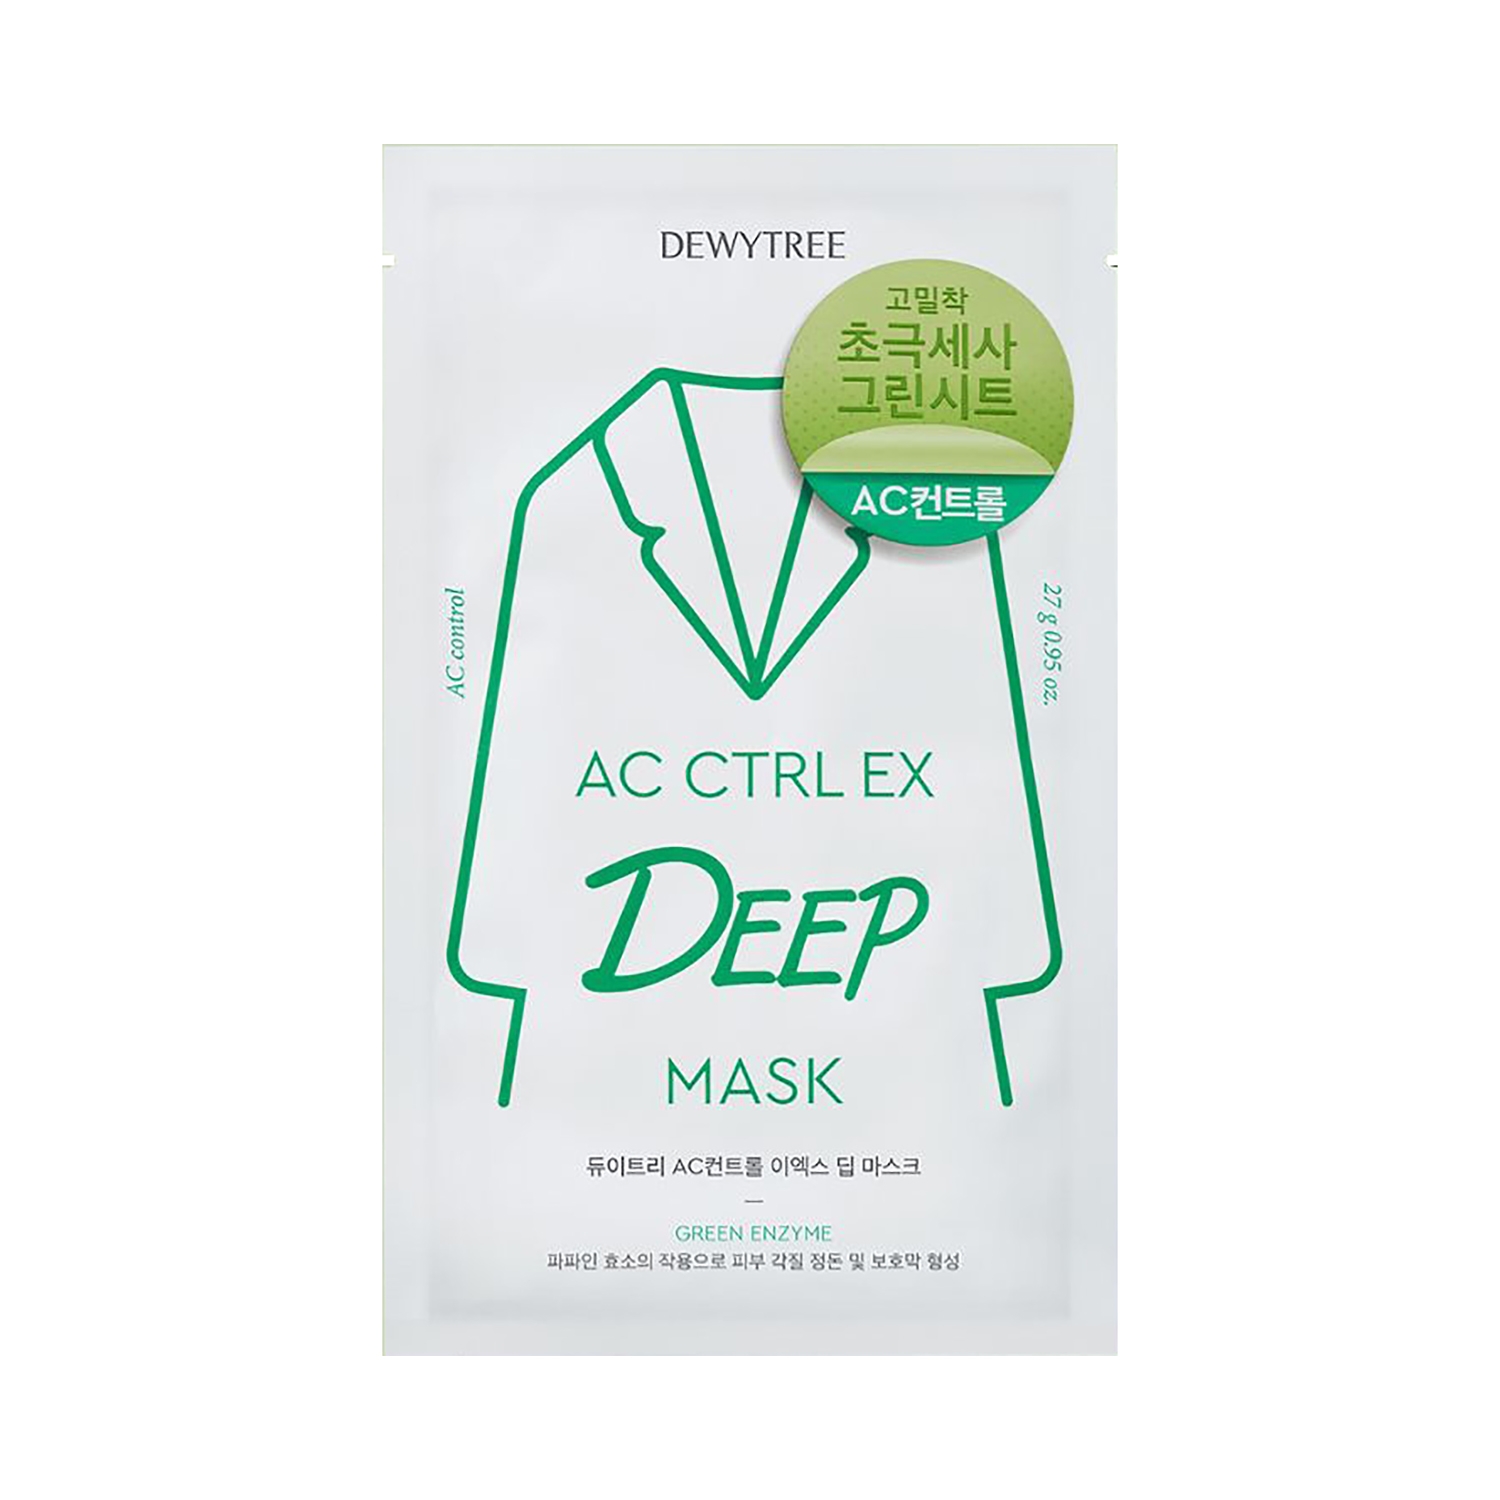 Dewytree | Dewytree Ac Ctrl Ex Deep Sheet Mask (27g)